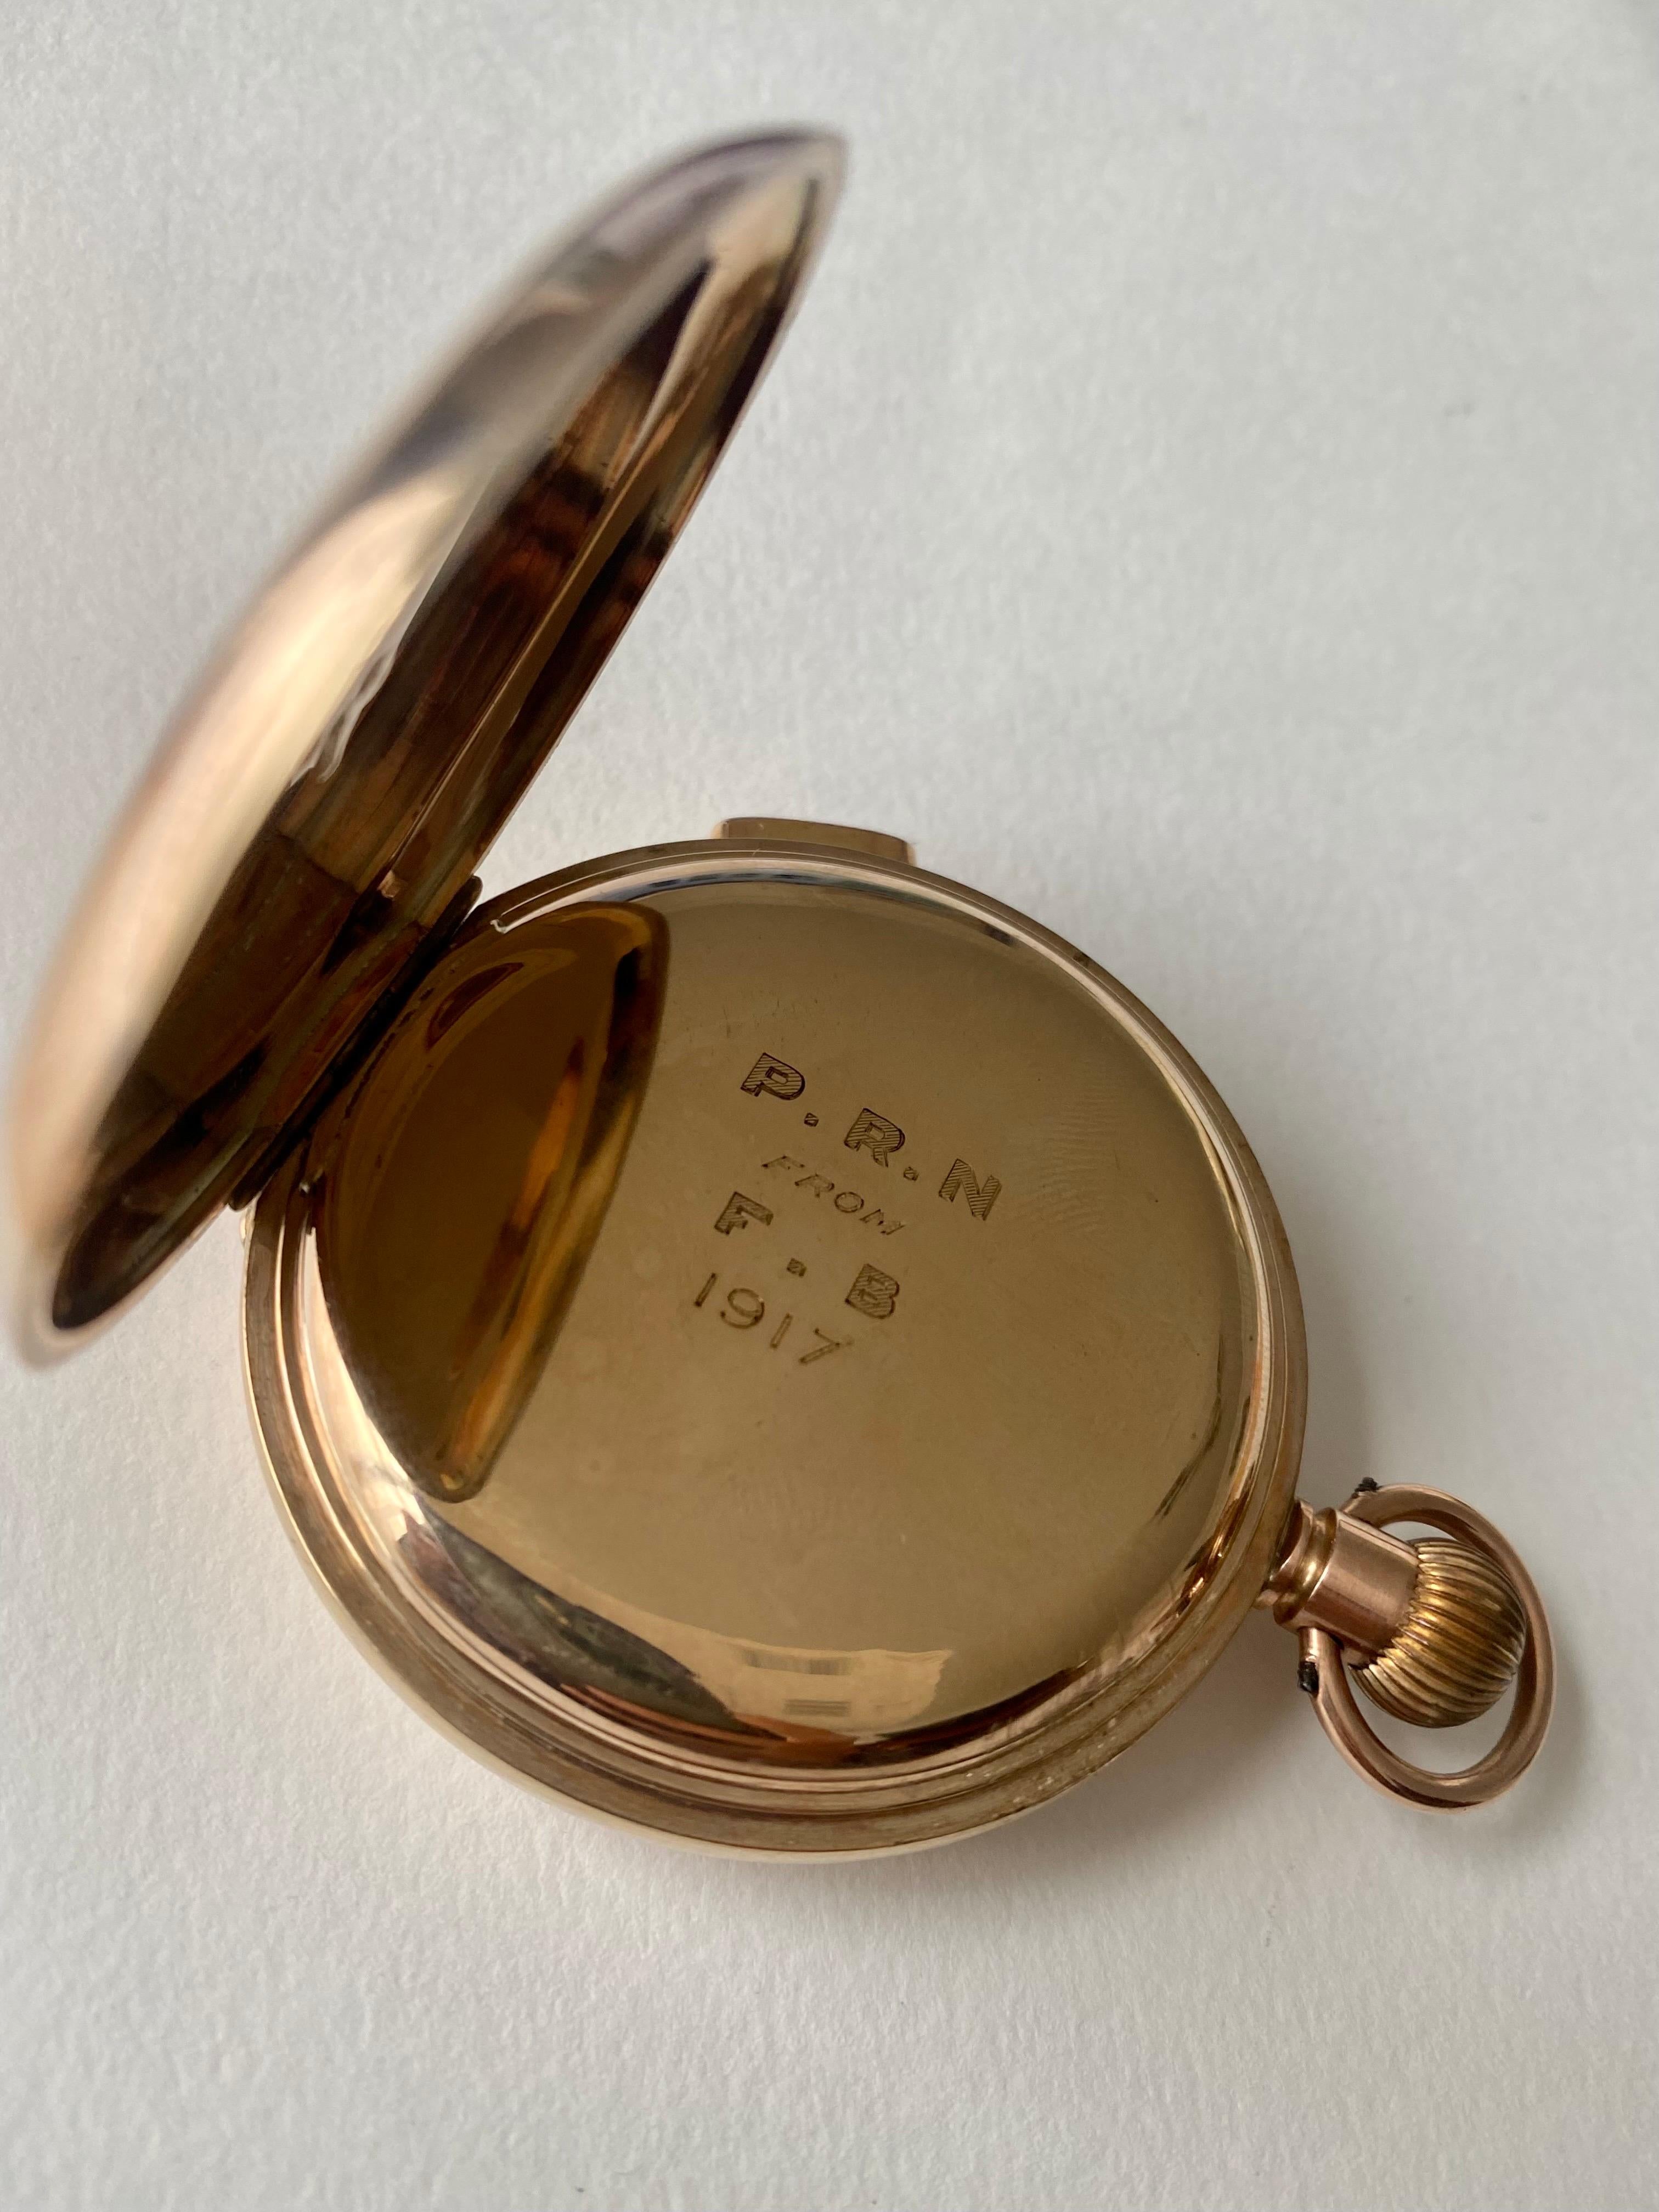 9 Karat Gold Full Hunter Quarter Repeater Pocket Watch Signed the Vigilant Watch For Sale 7